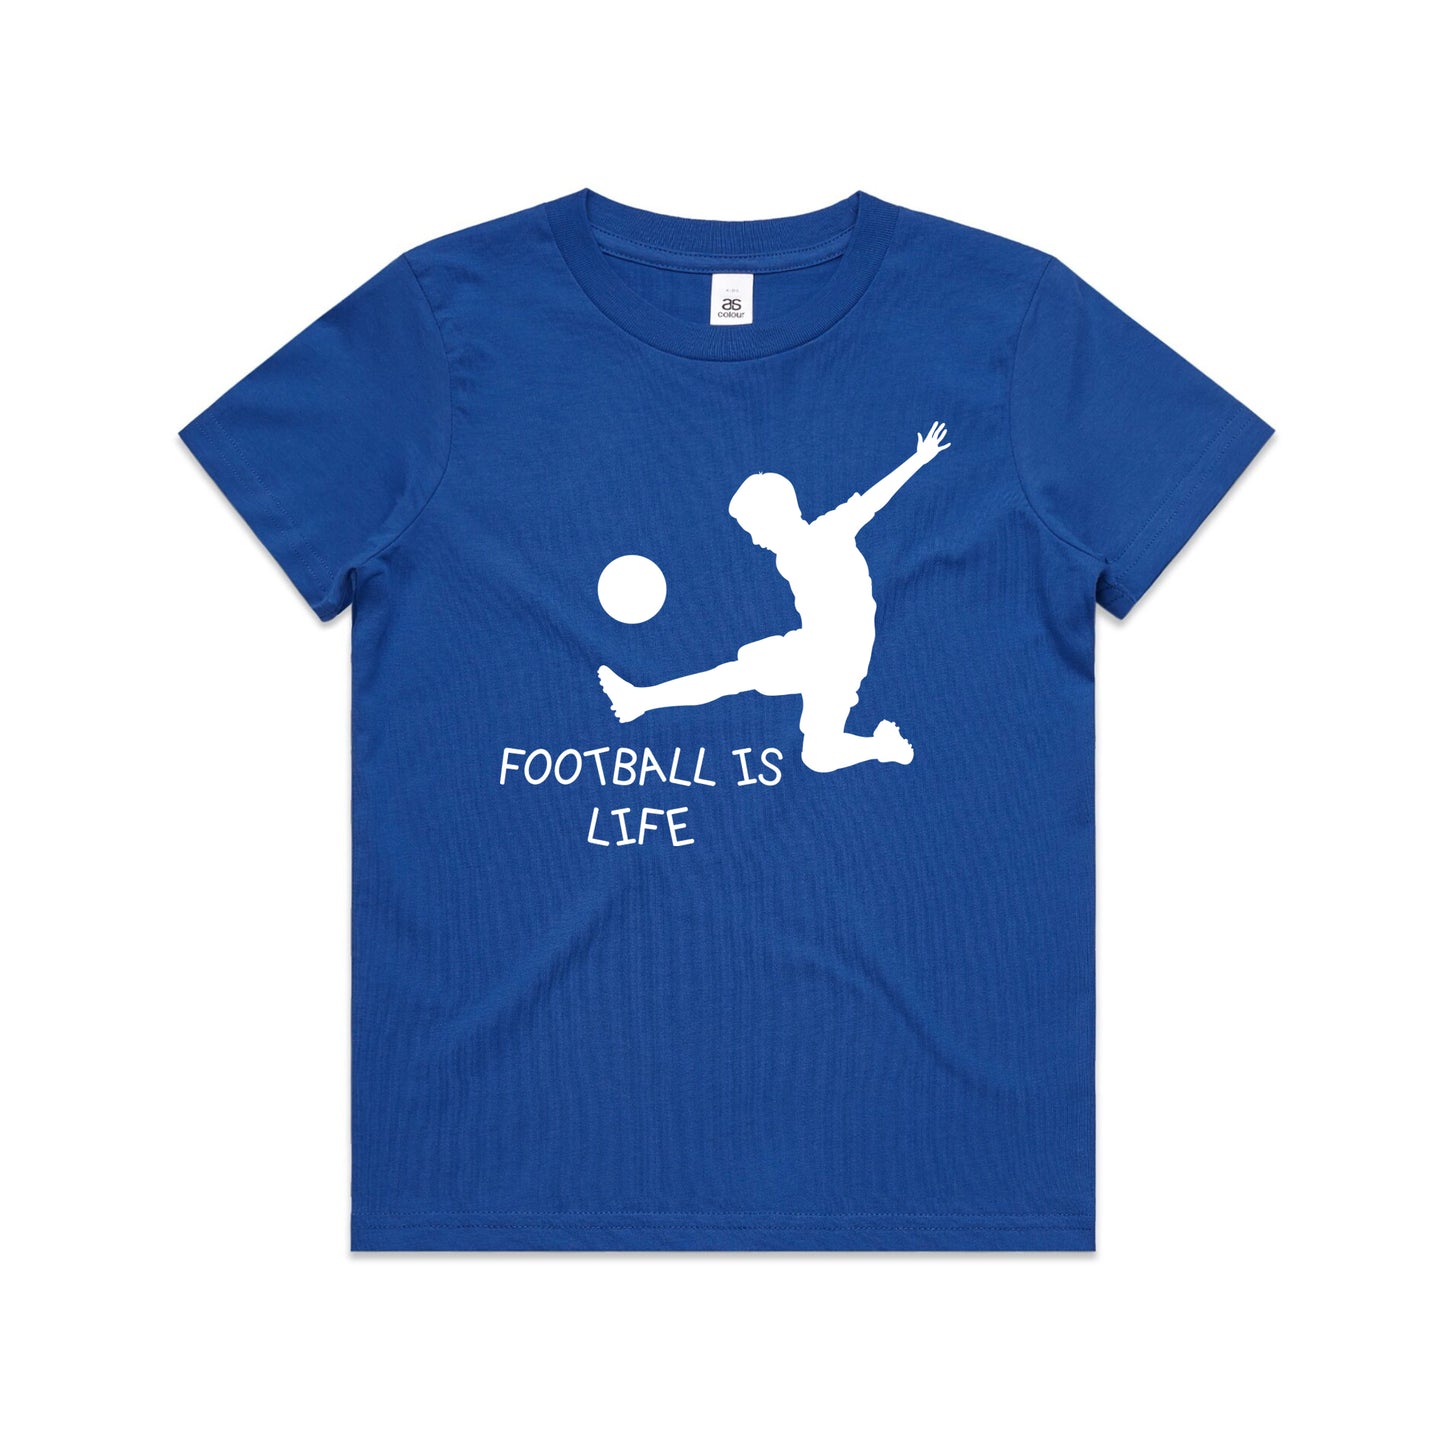 Football is Life T-shirt